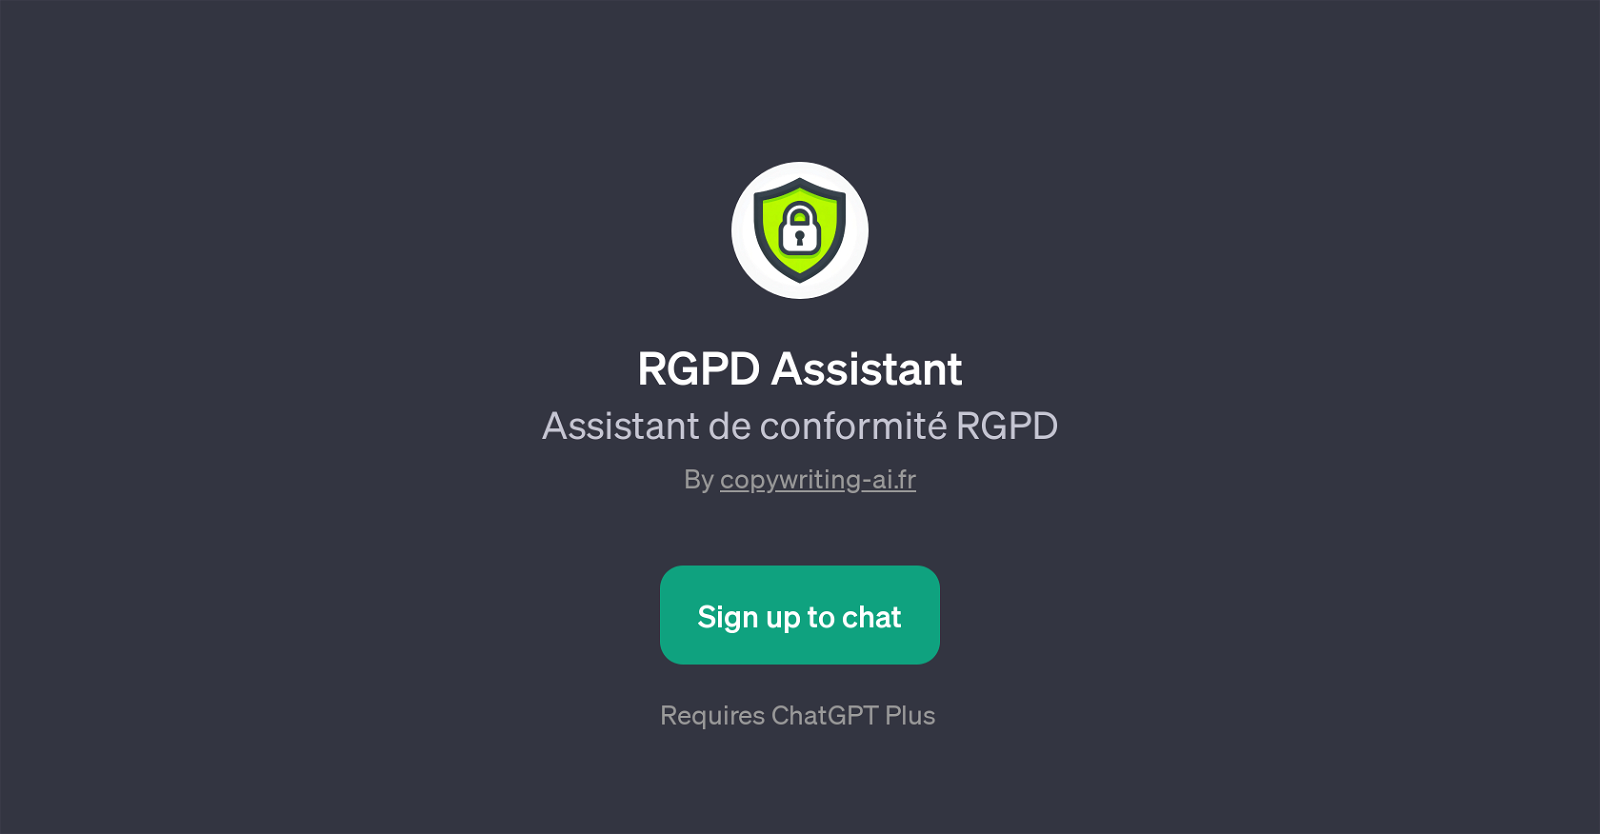 RGPD Assistant website